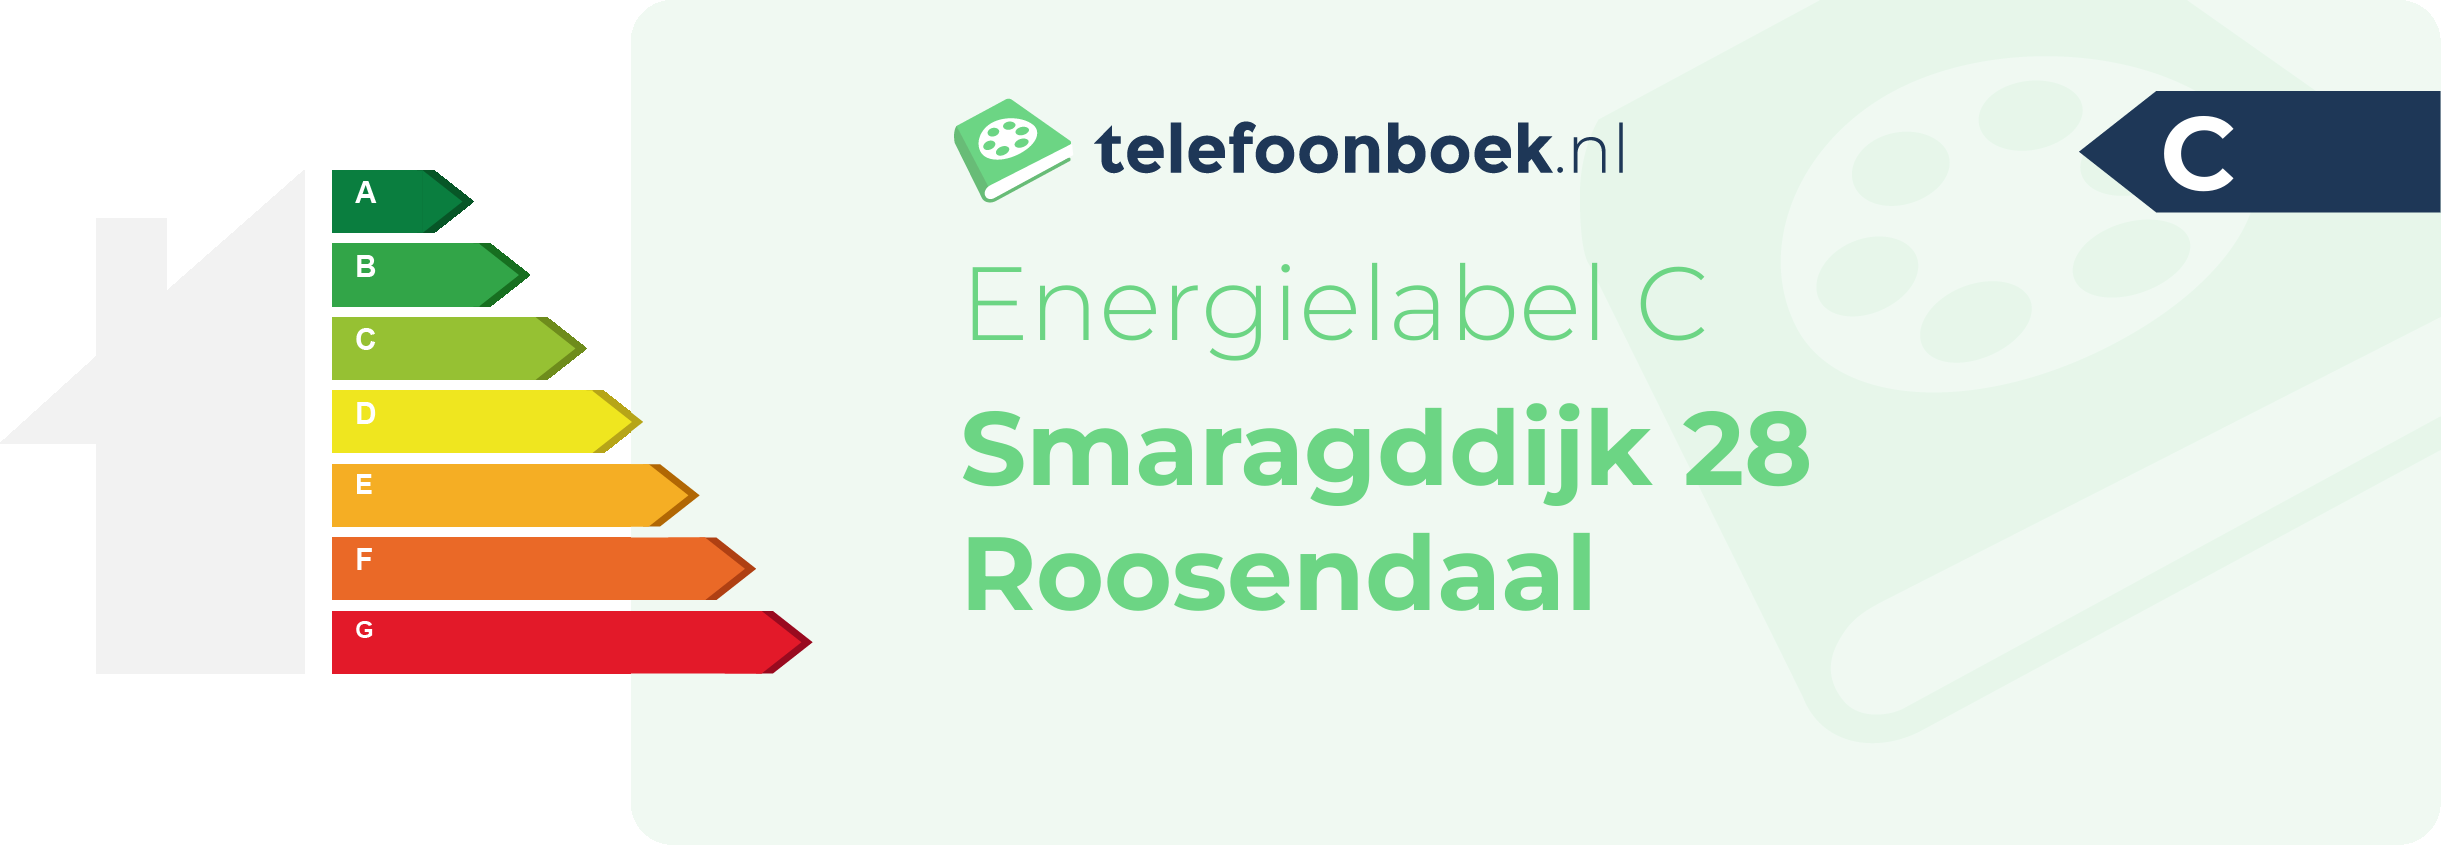 Energielabel Smaragddijk 28 Roosendaal